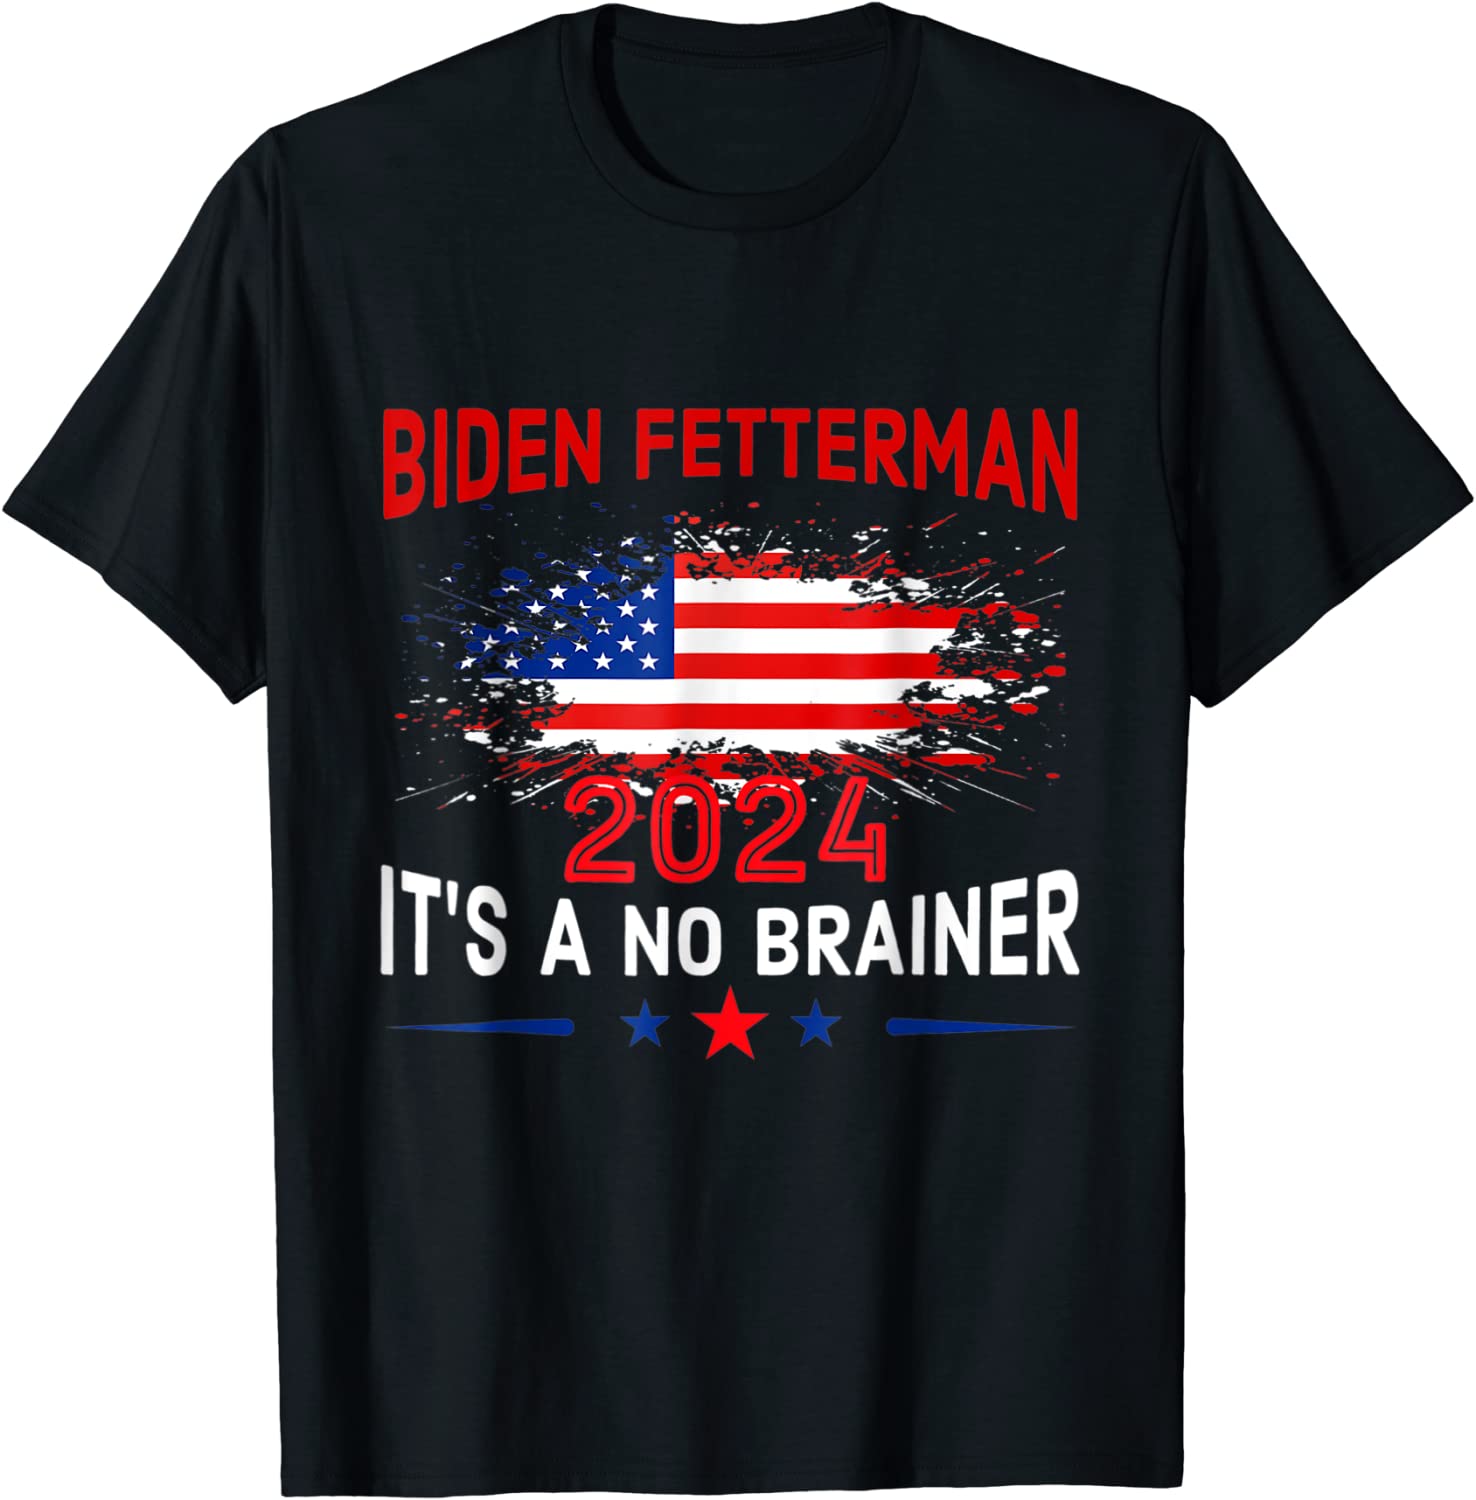 Biden Fetterman 2024 American Flag Tee Shirt ShirtElephant Office